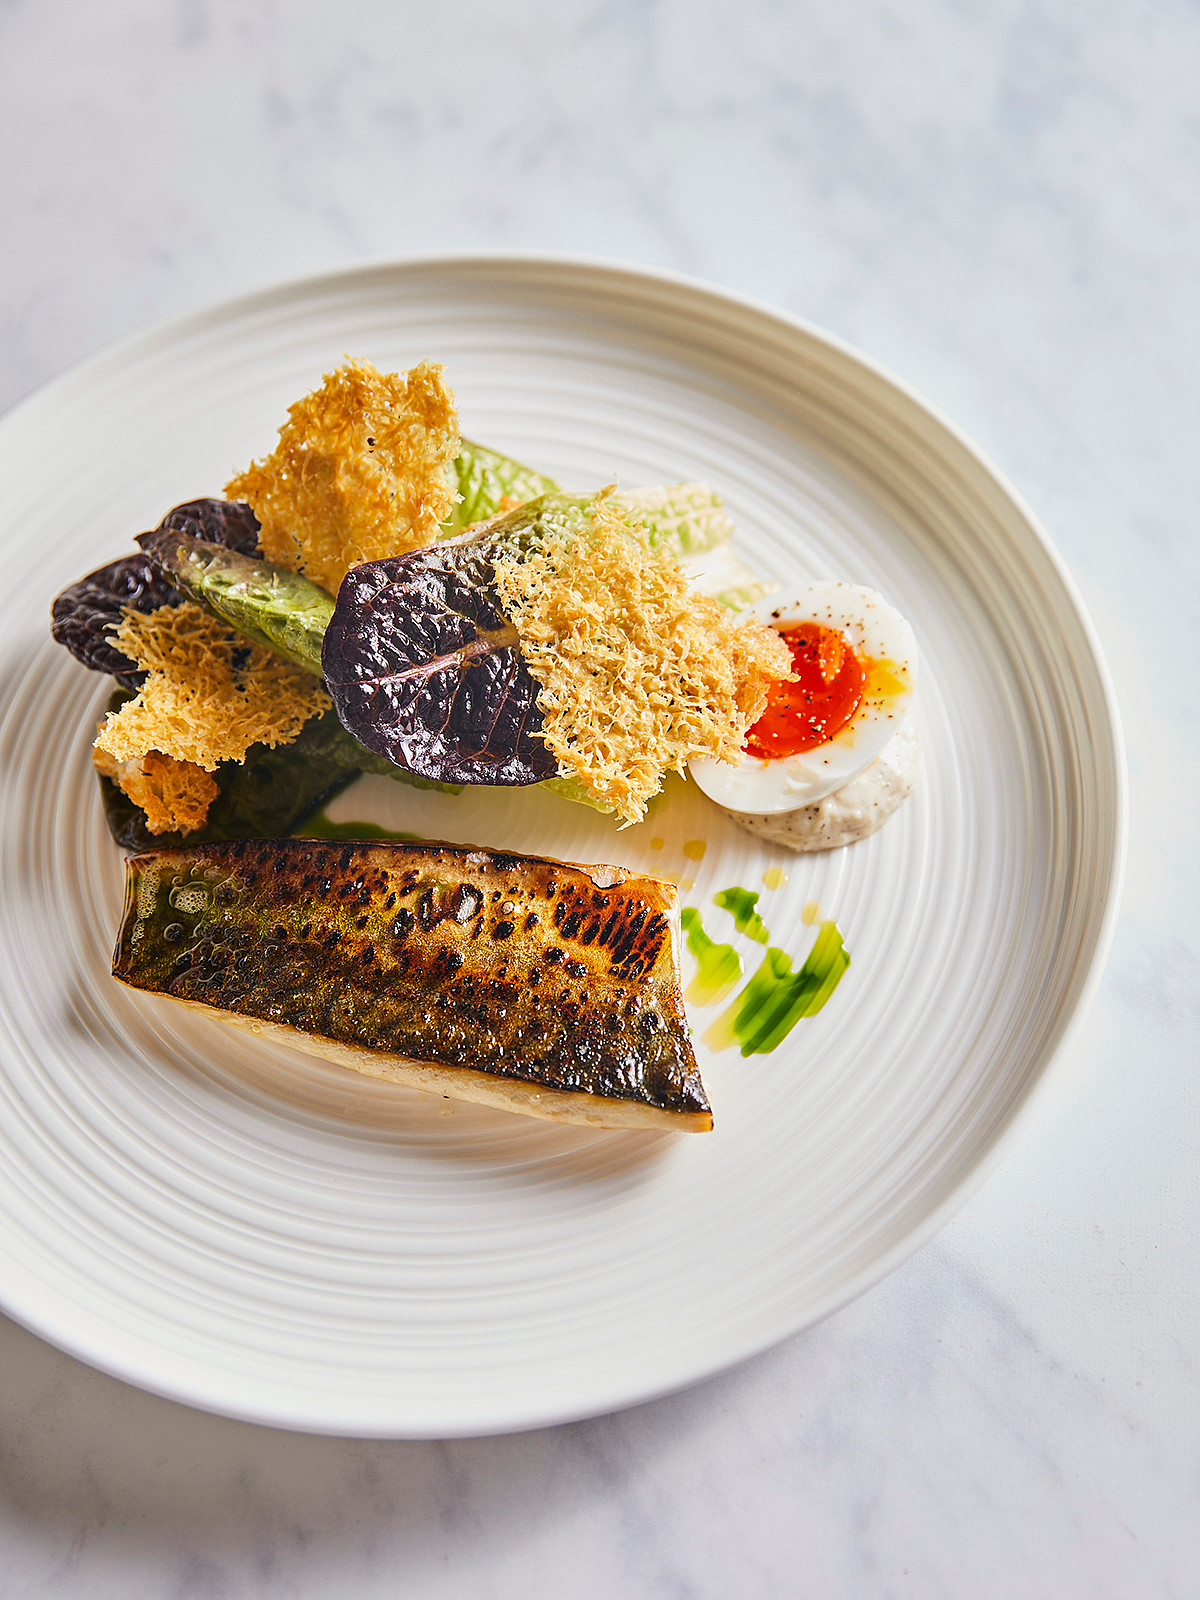 Charred mackerel, on the menu at Design restaurant by Social Pantry